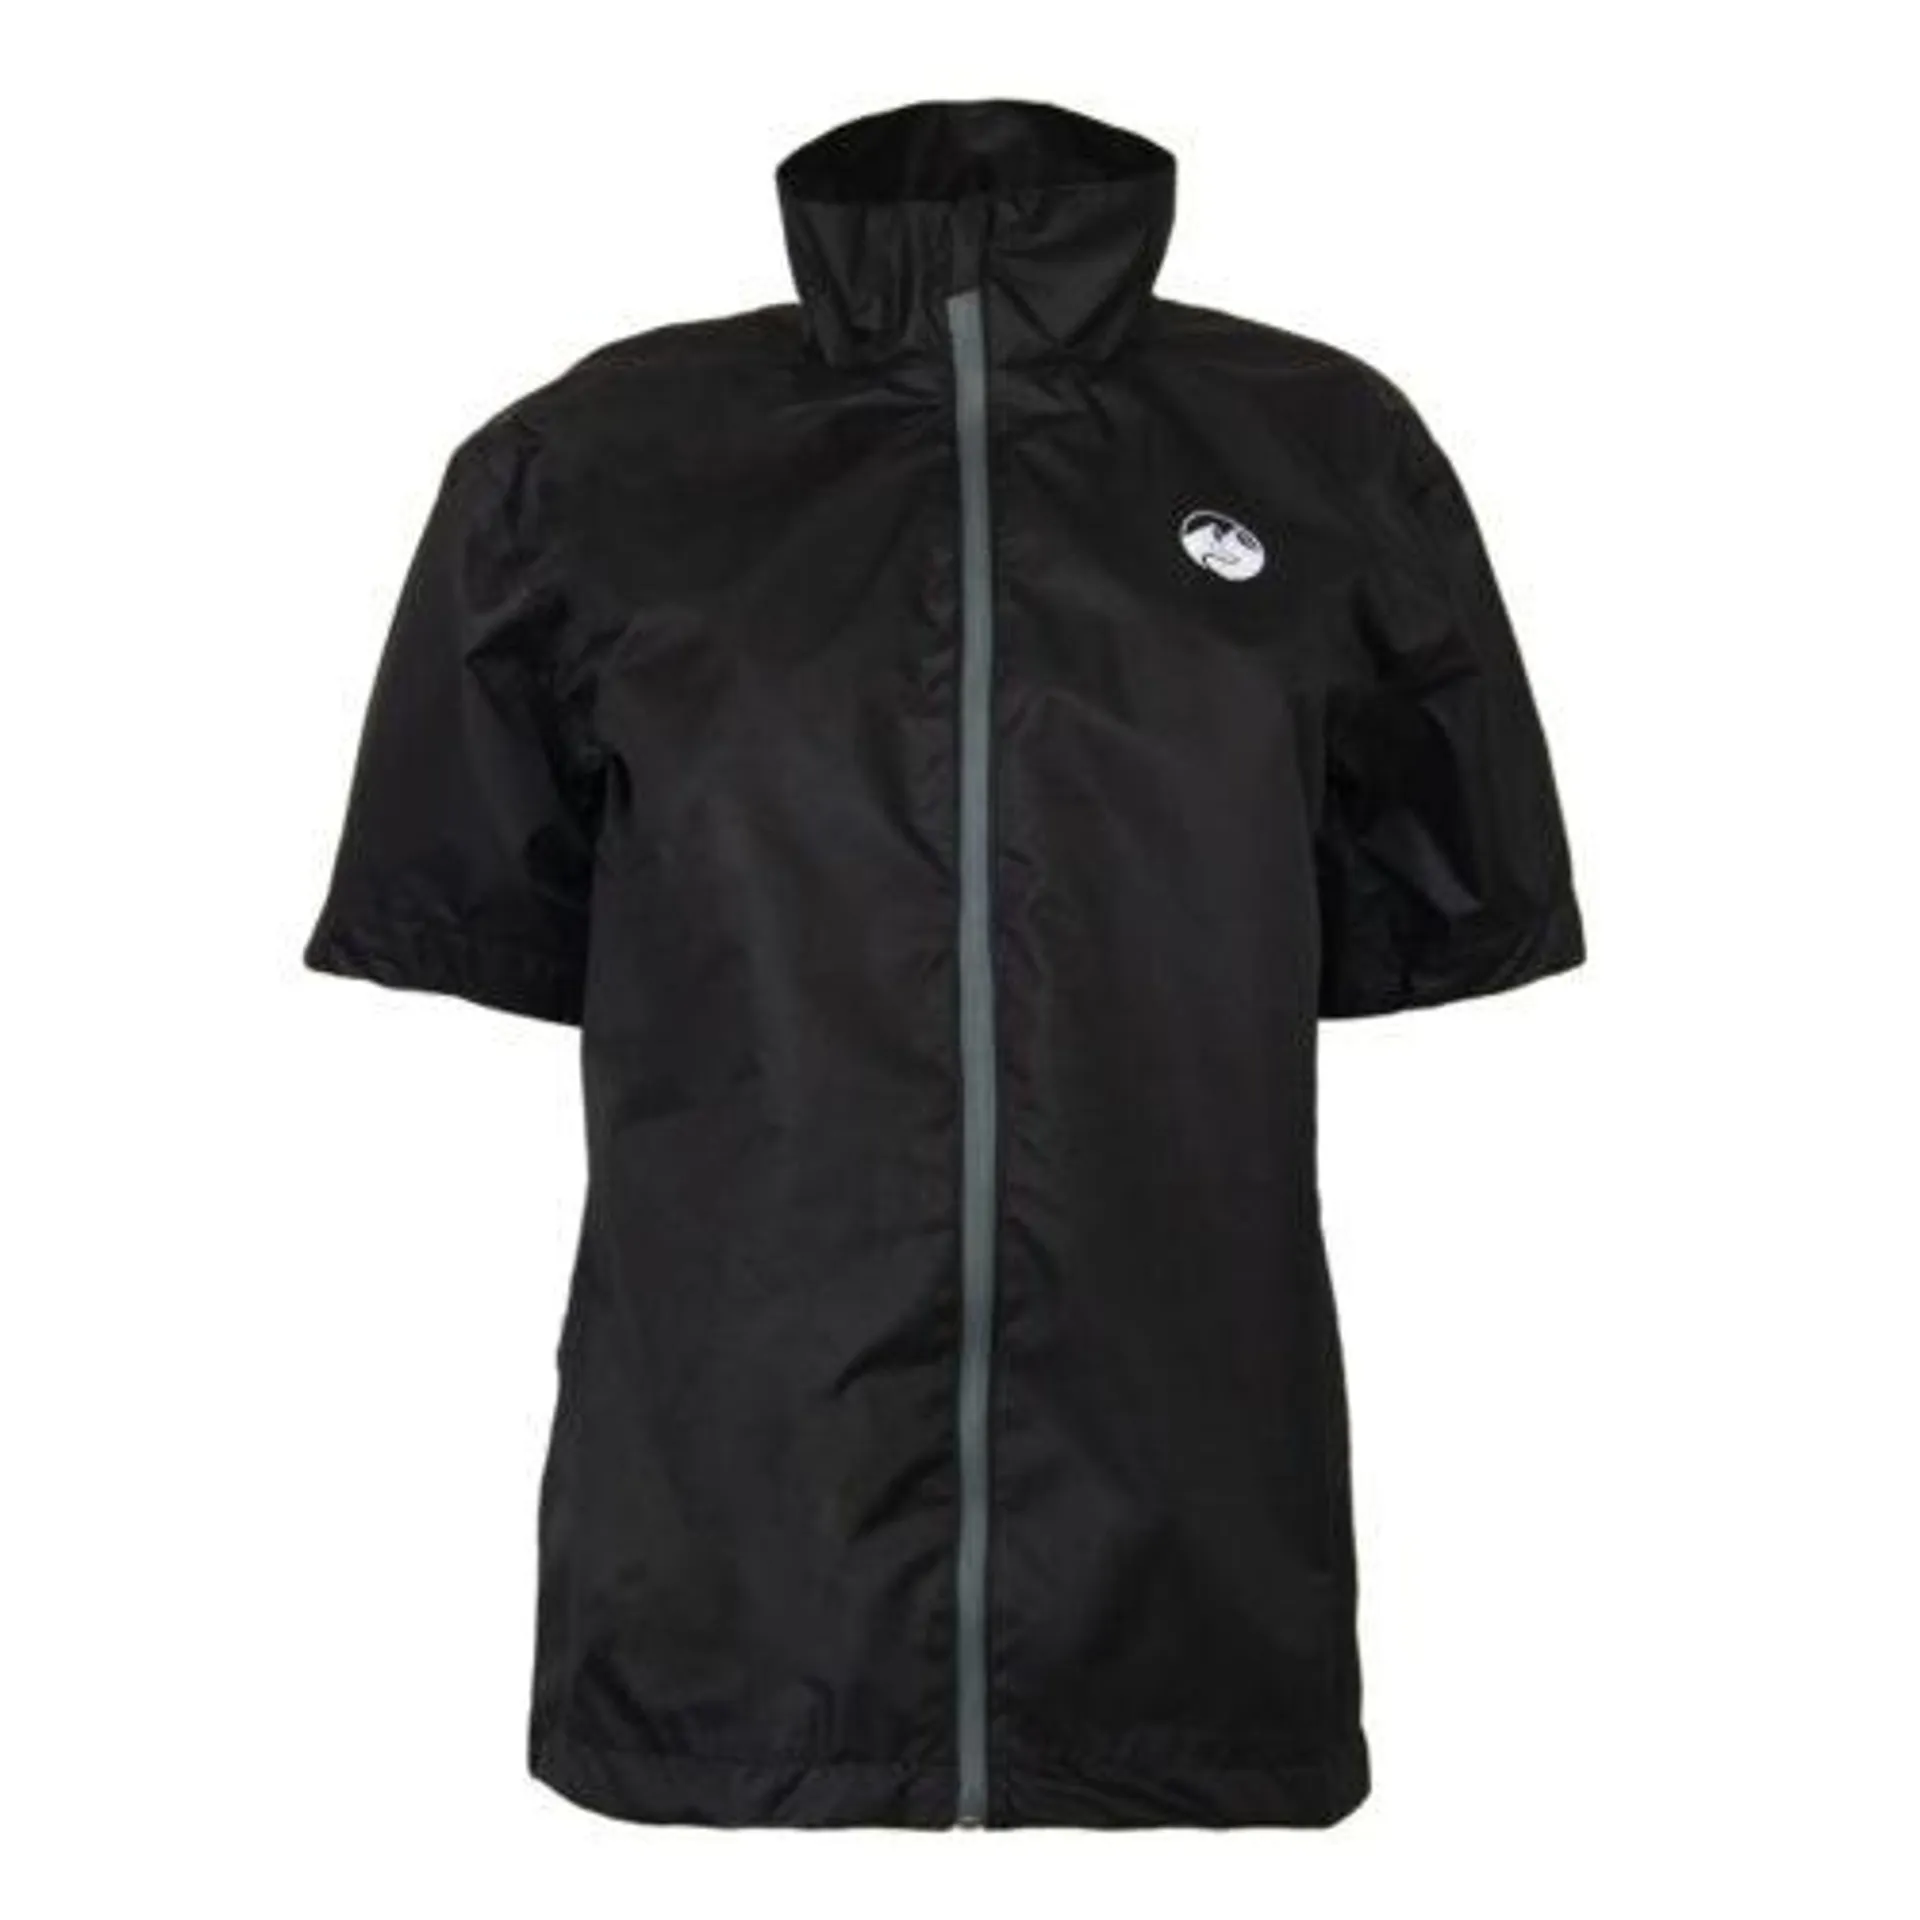 Cross Creek Rain Jacket Short Sleeve – Black